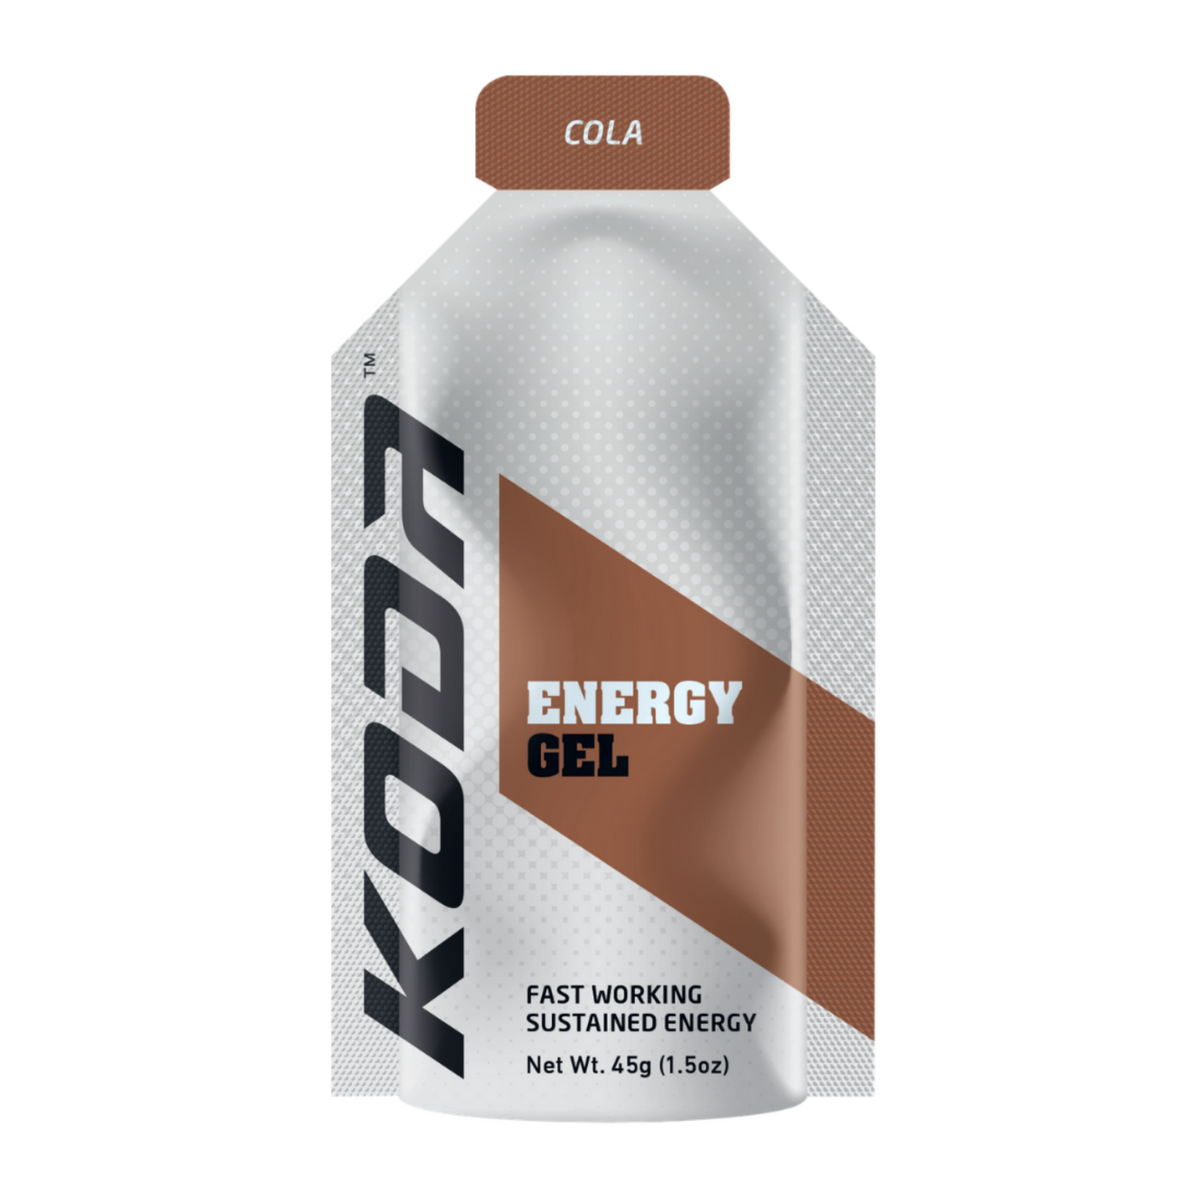 Koda Energy Gel in Cola flavour